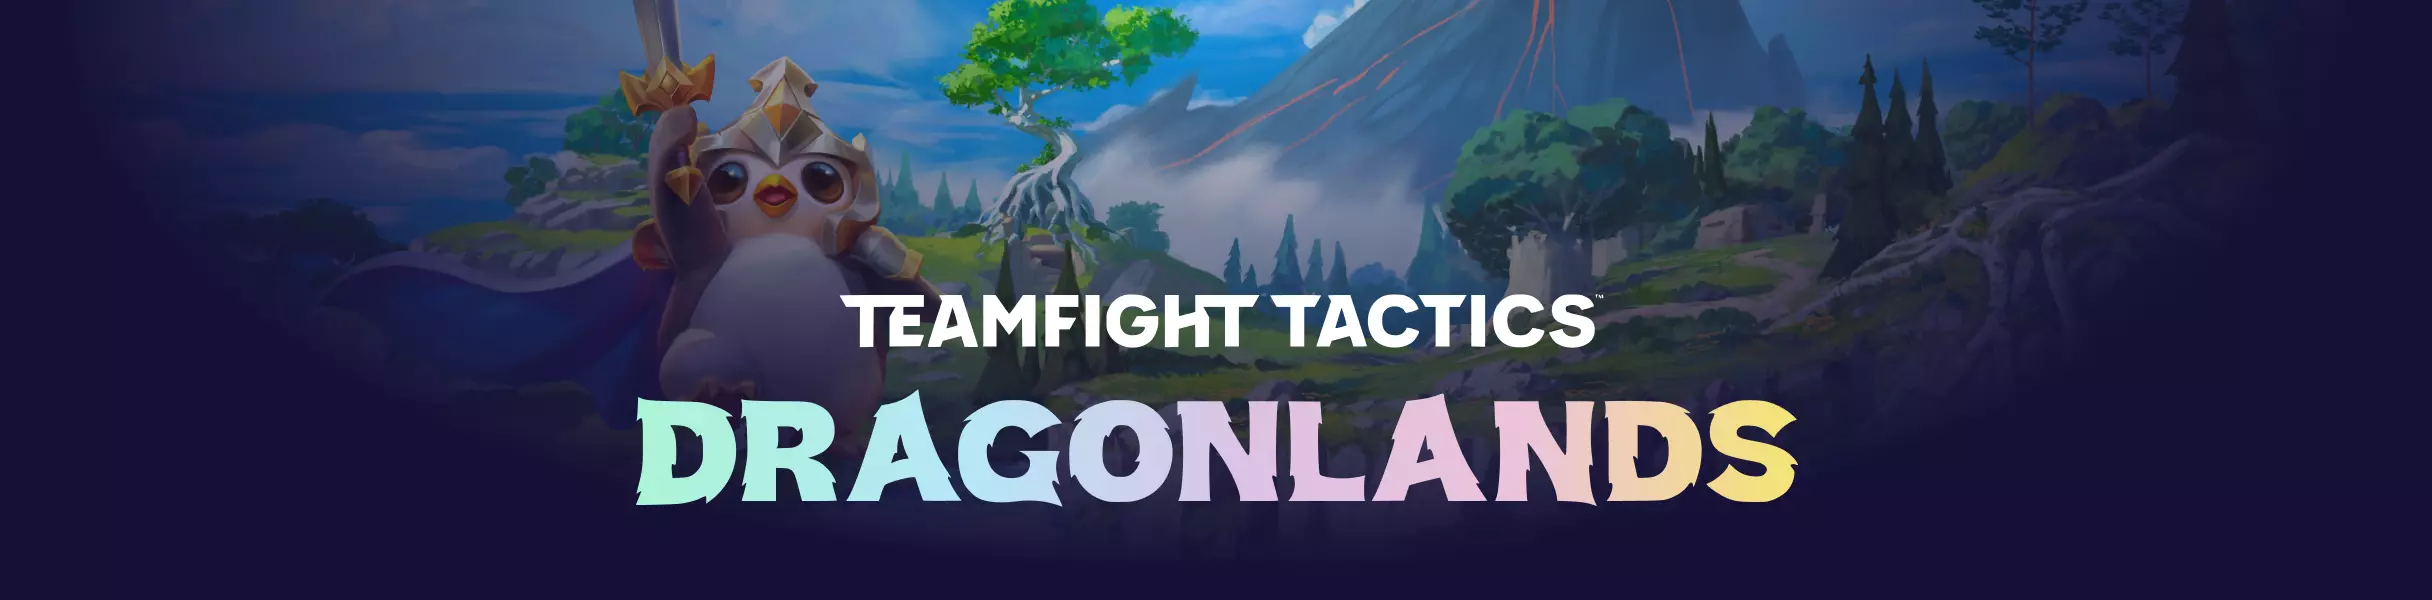 Teamfight Tactics Set 6: Gizmos & Gadgets